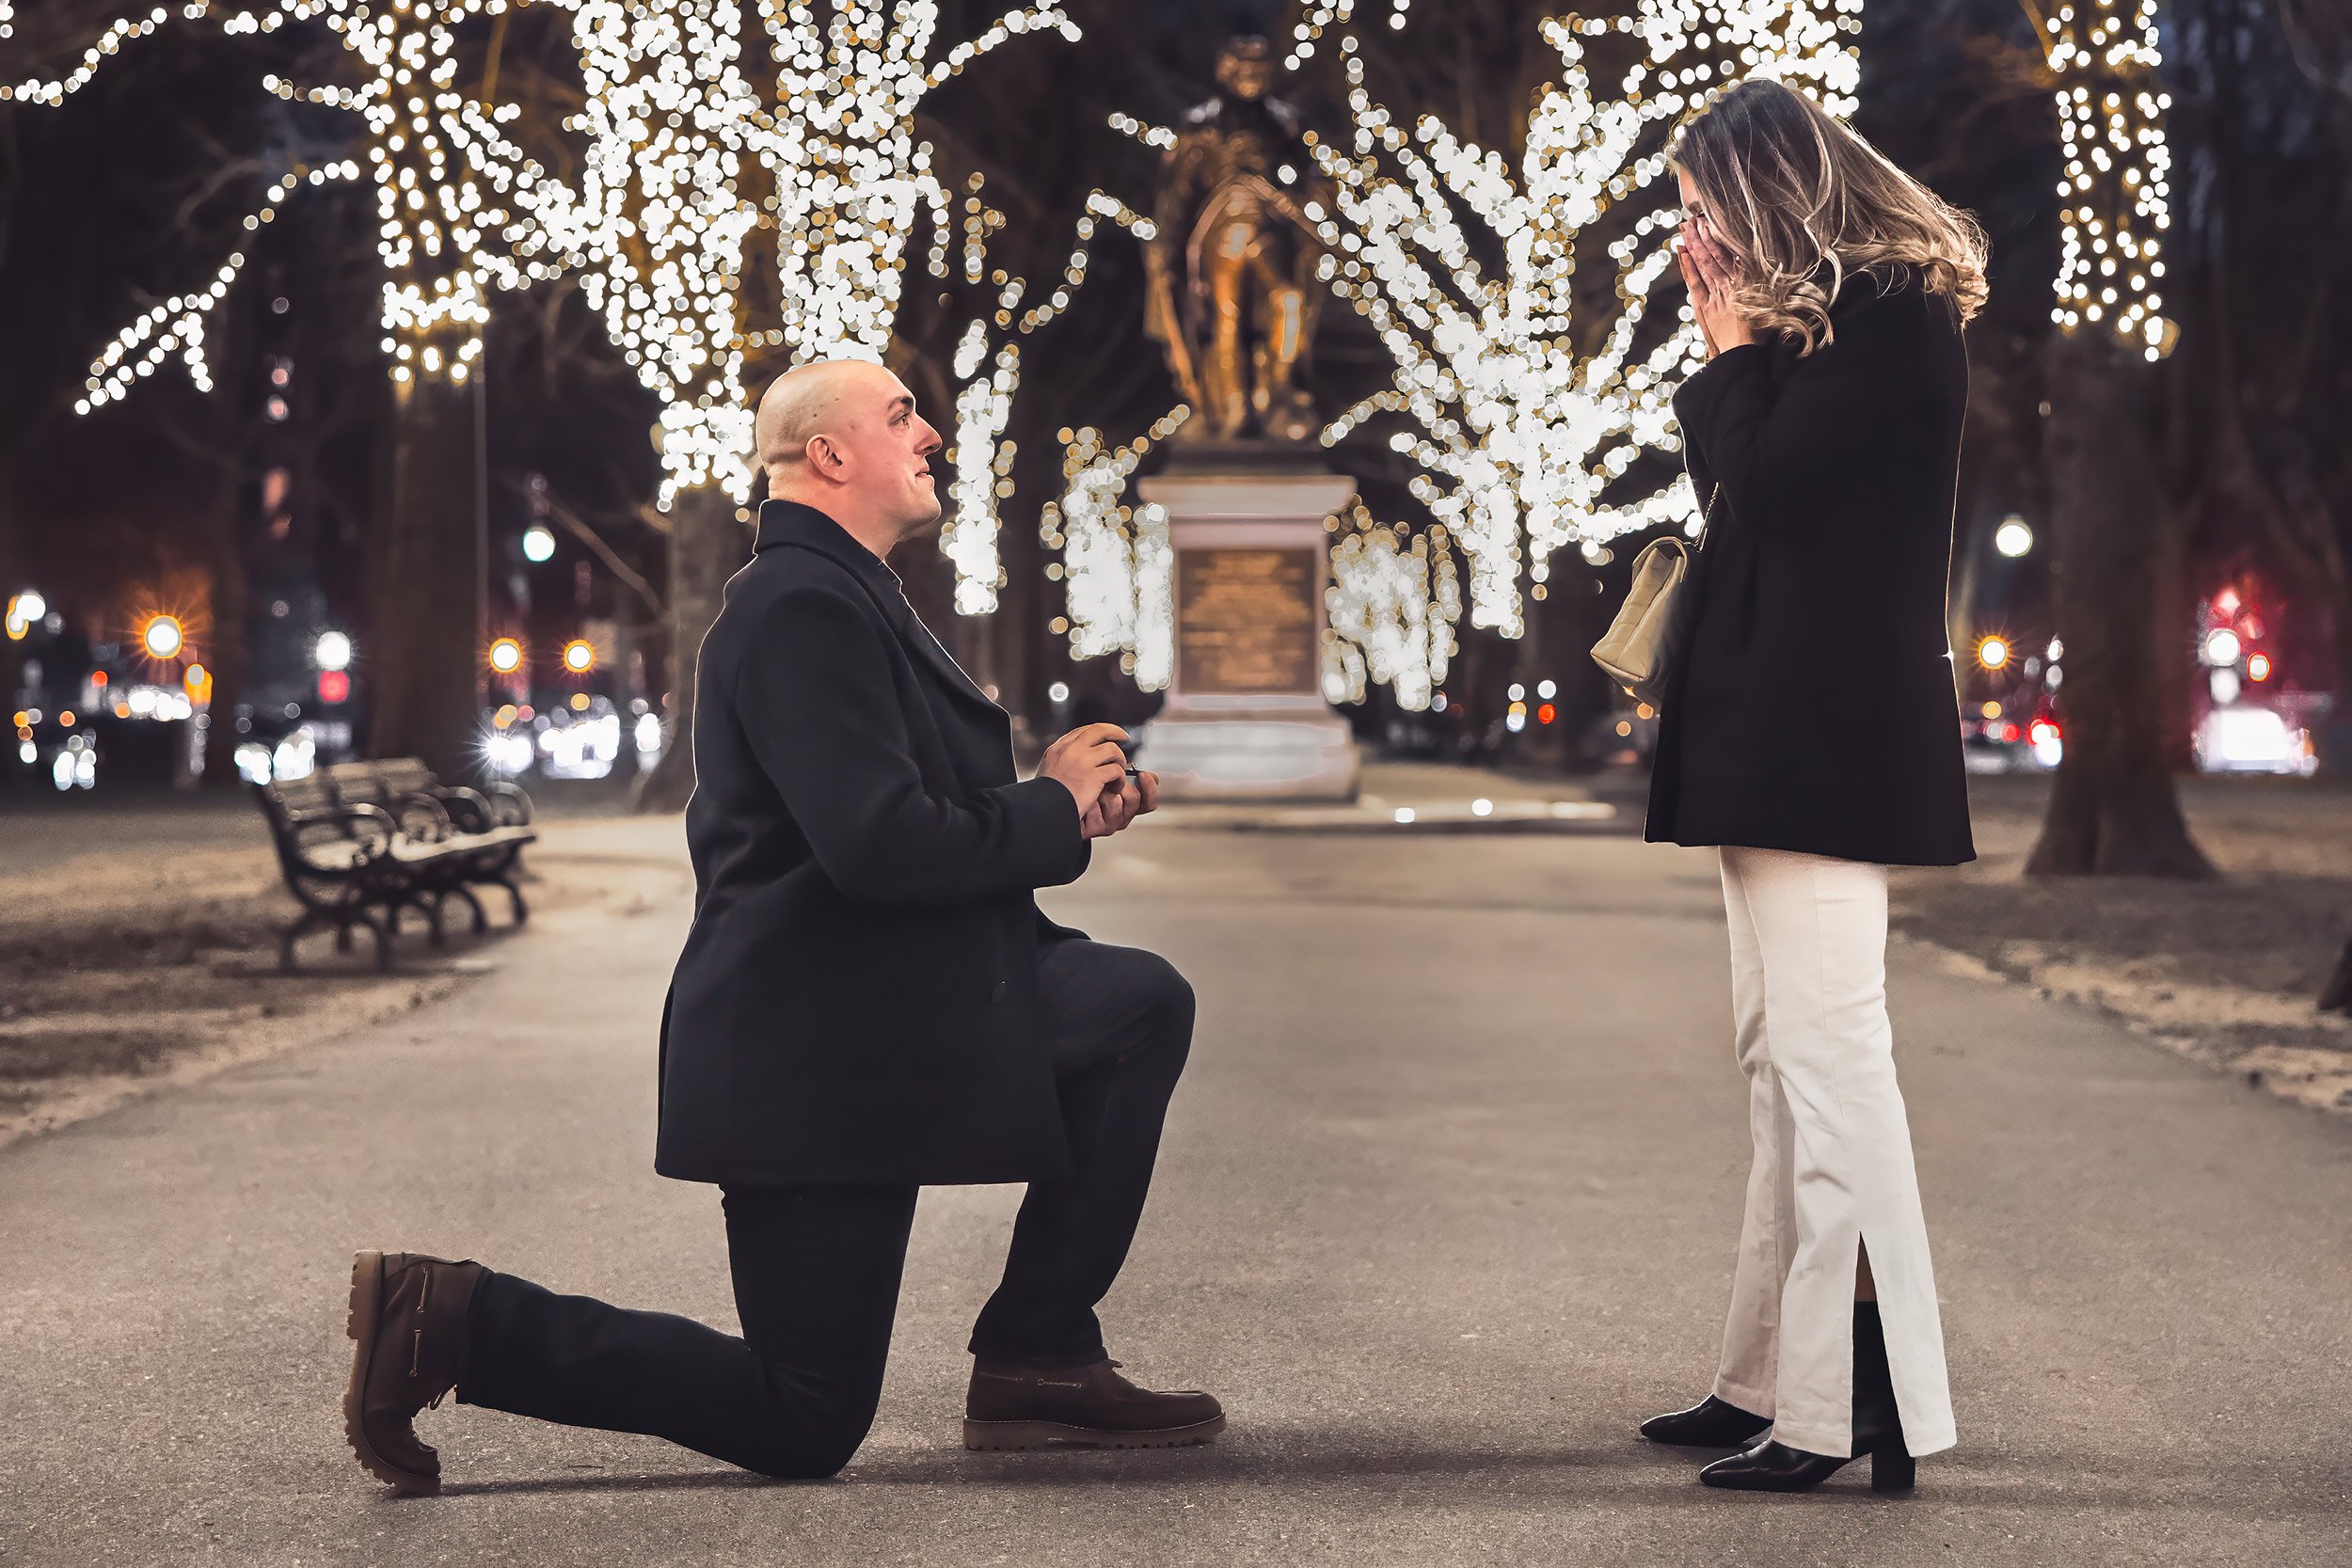 Boston Engagement Proposal Photographer | Stephen Grant Photography